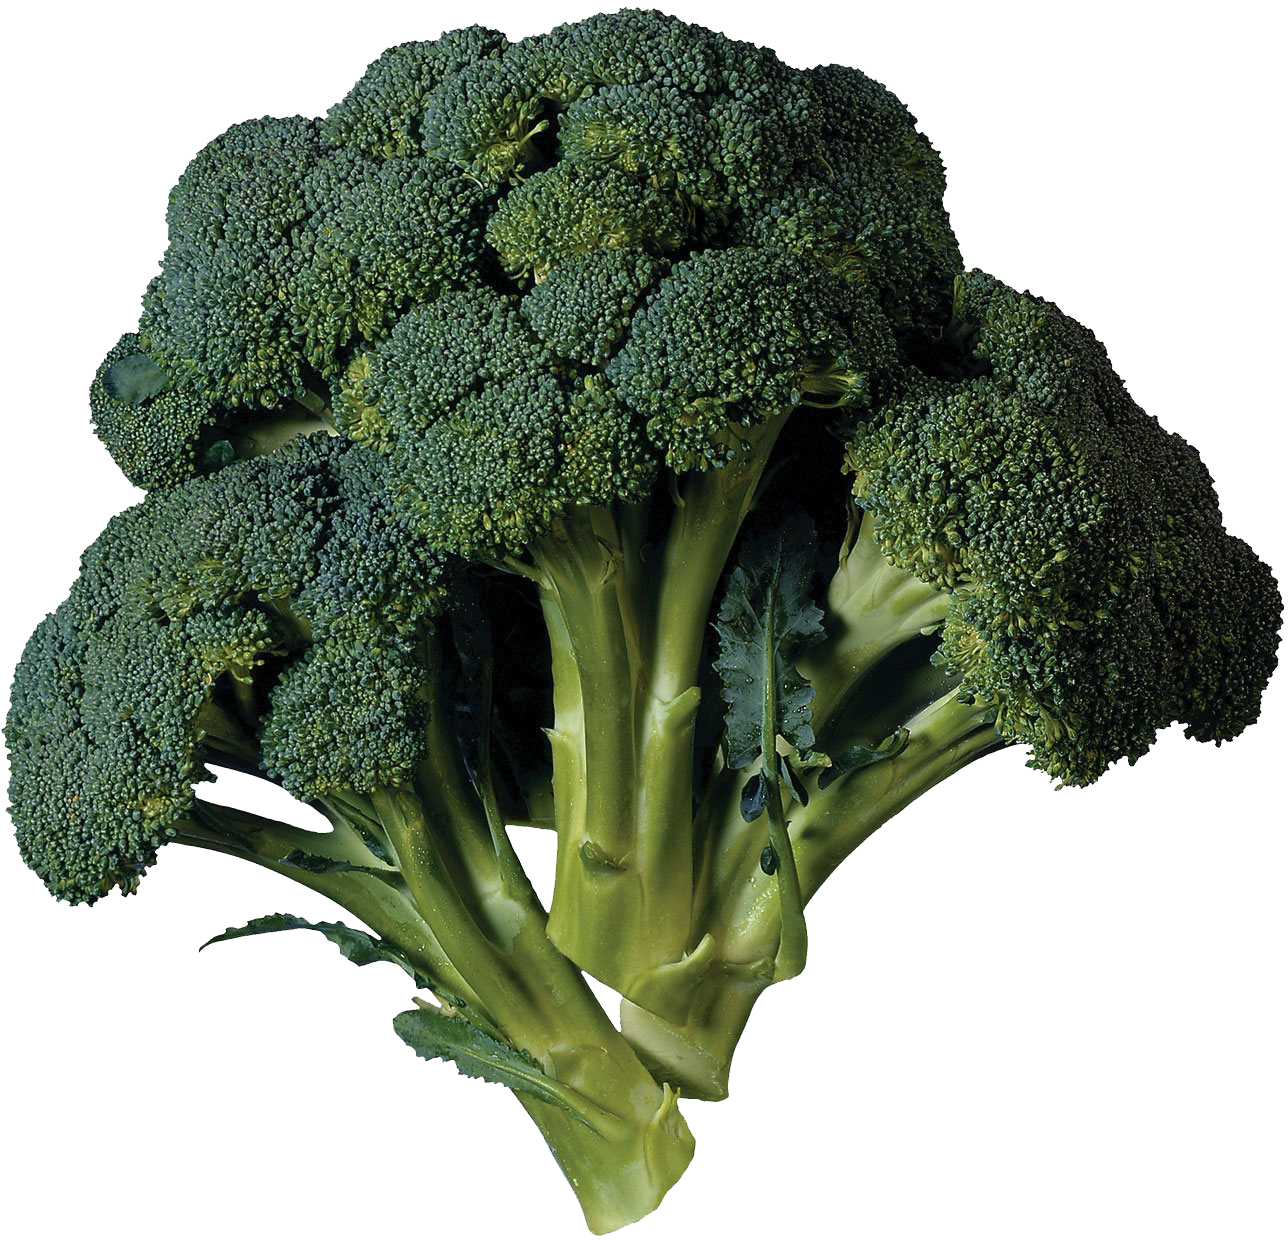 Download PNG image - Green Broccoli PNG Transparent Image 